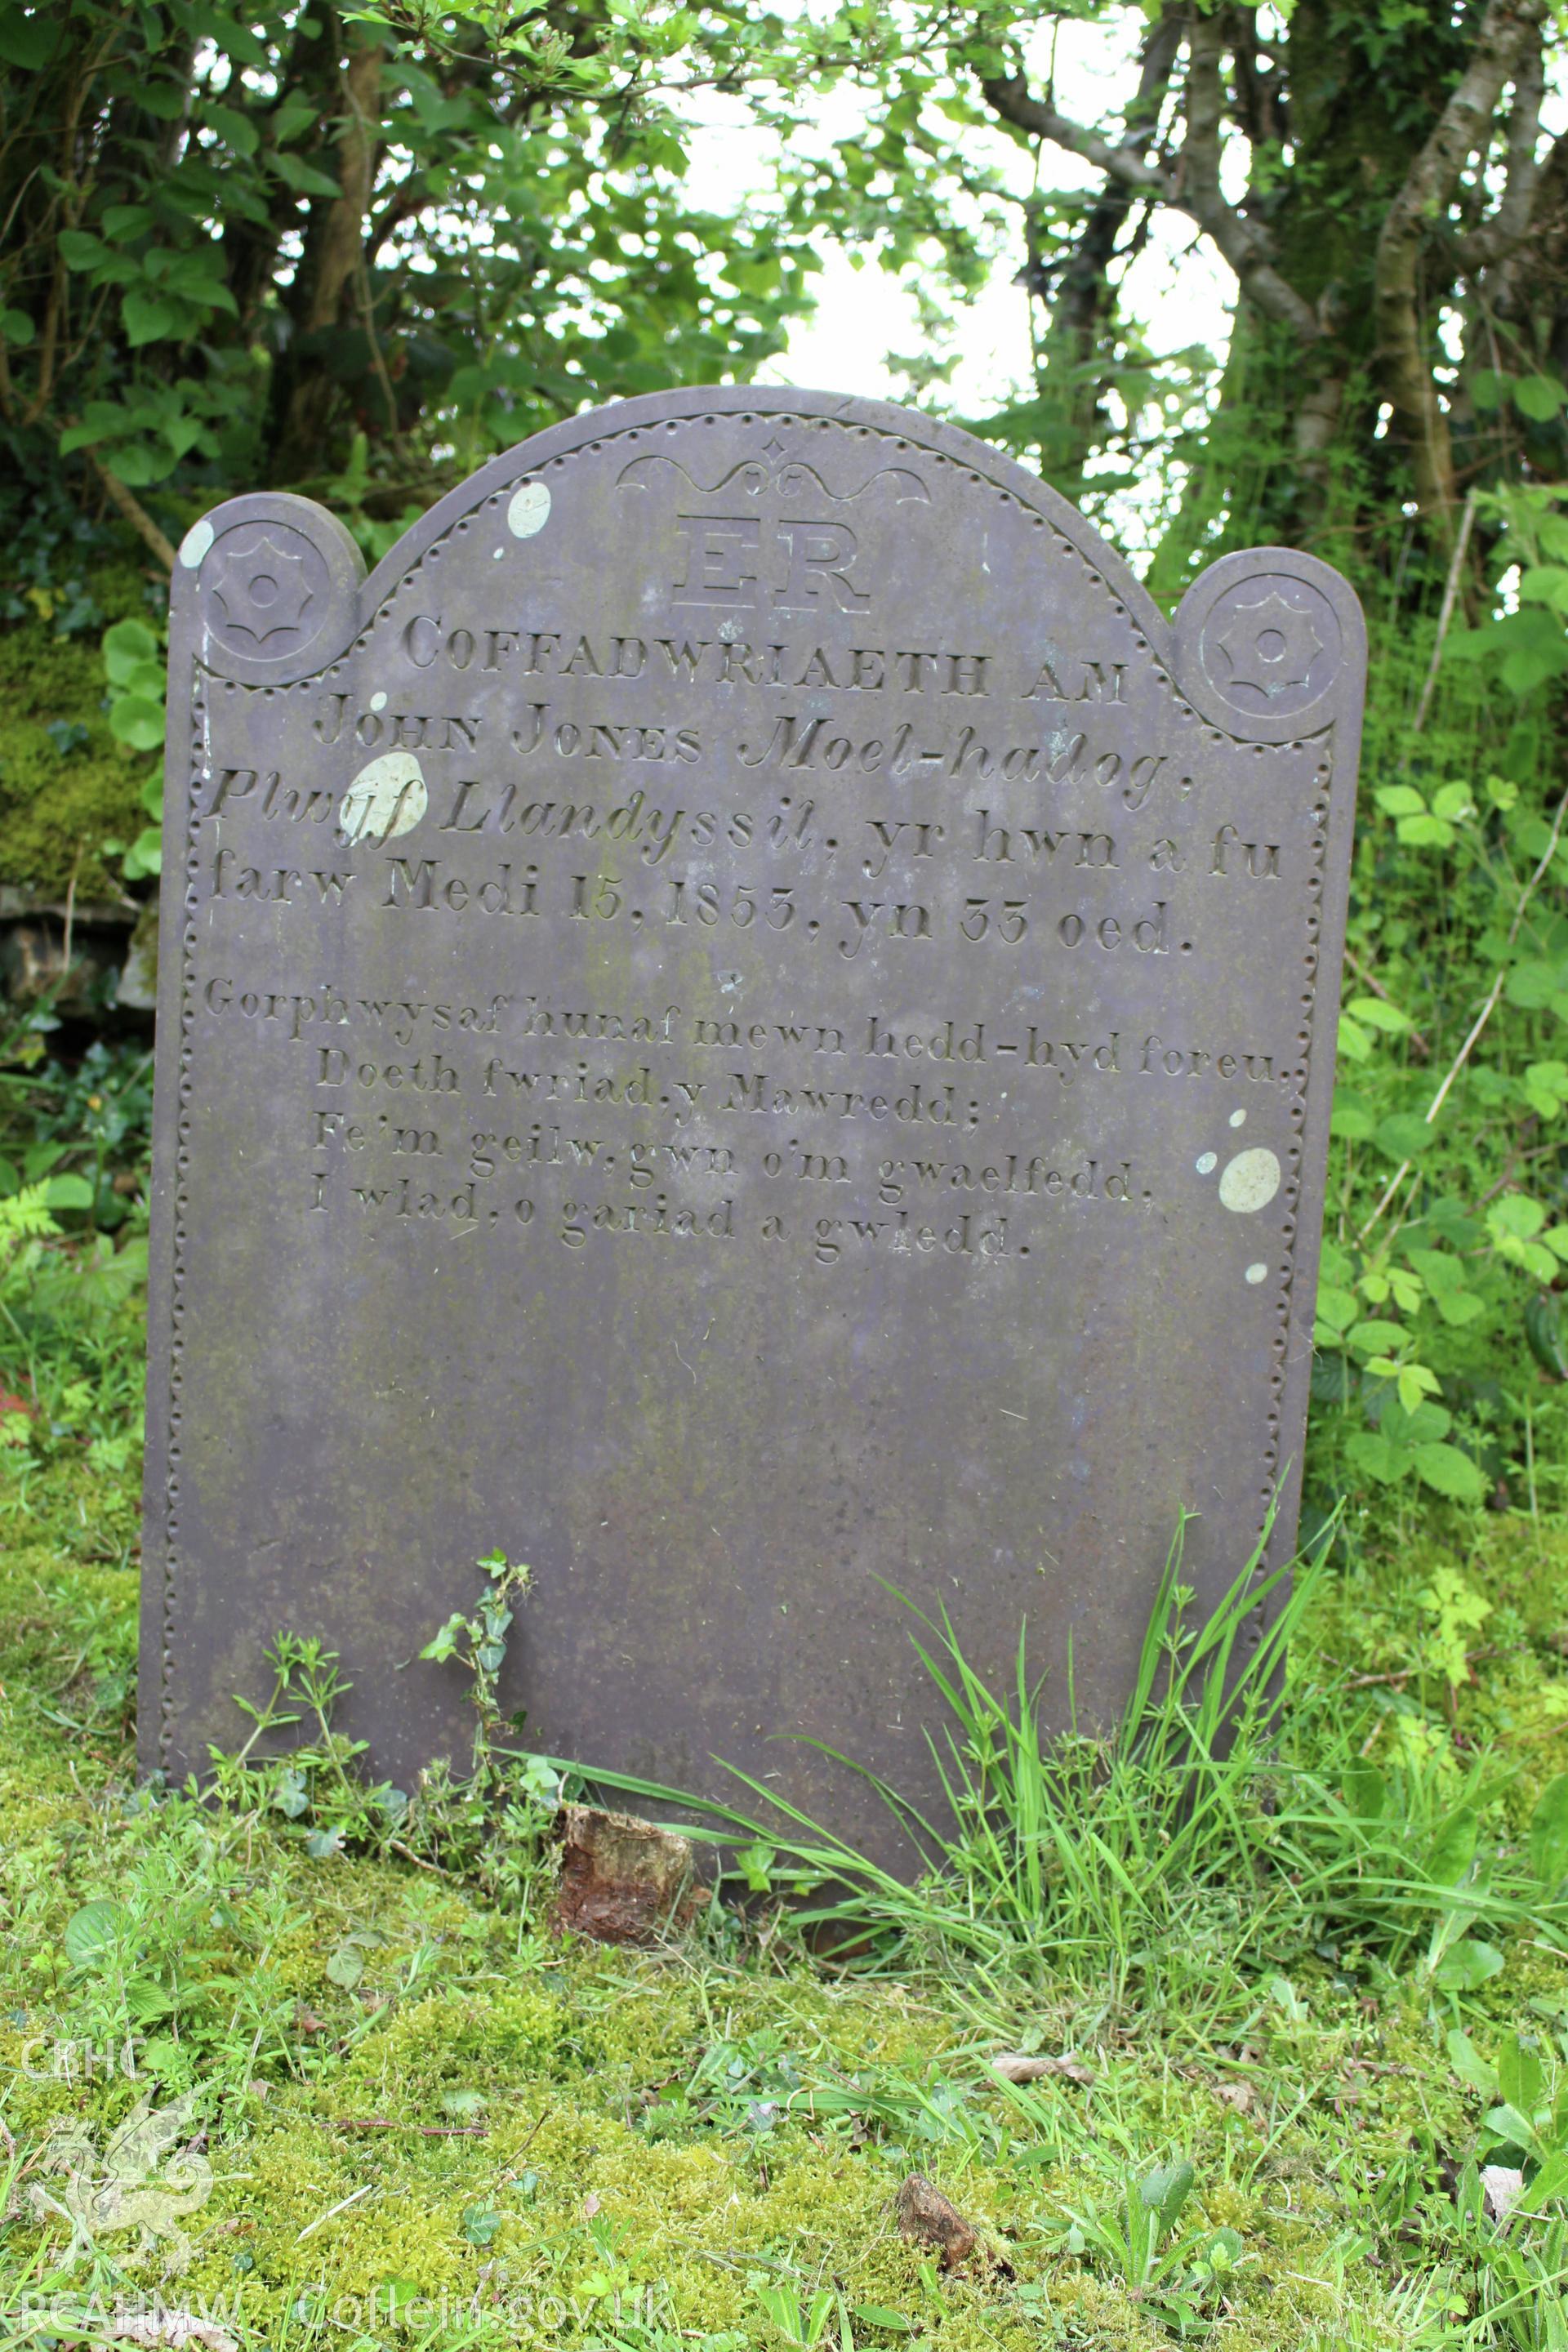 Gravestone of John Jones